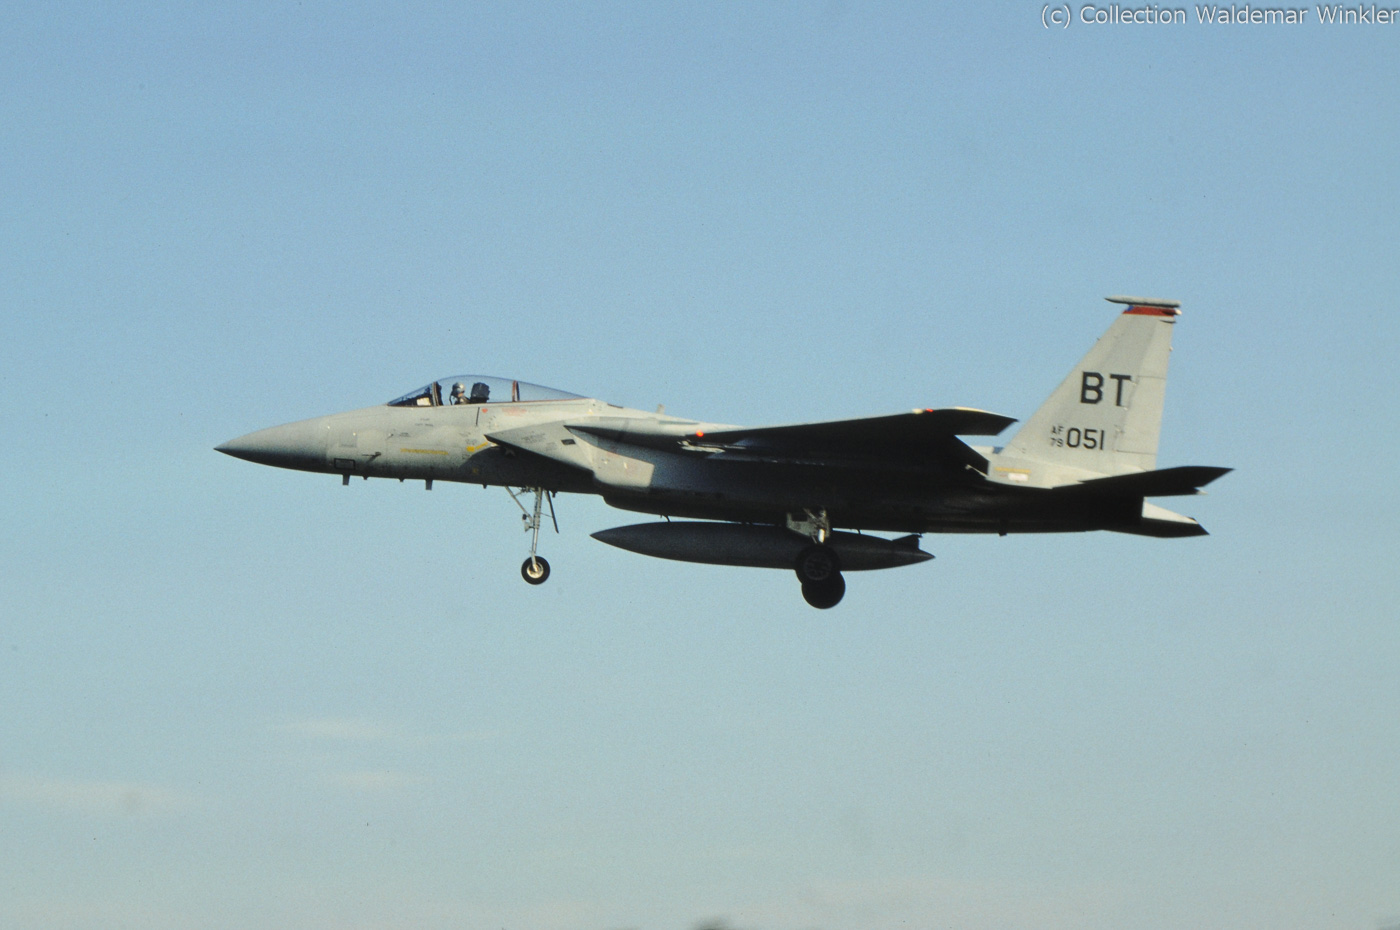 F-15C_Strike_Eagle_DSC_3001.jpg